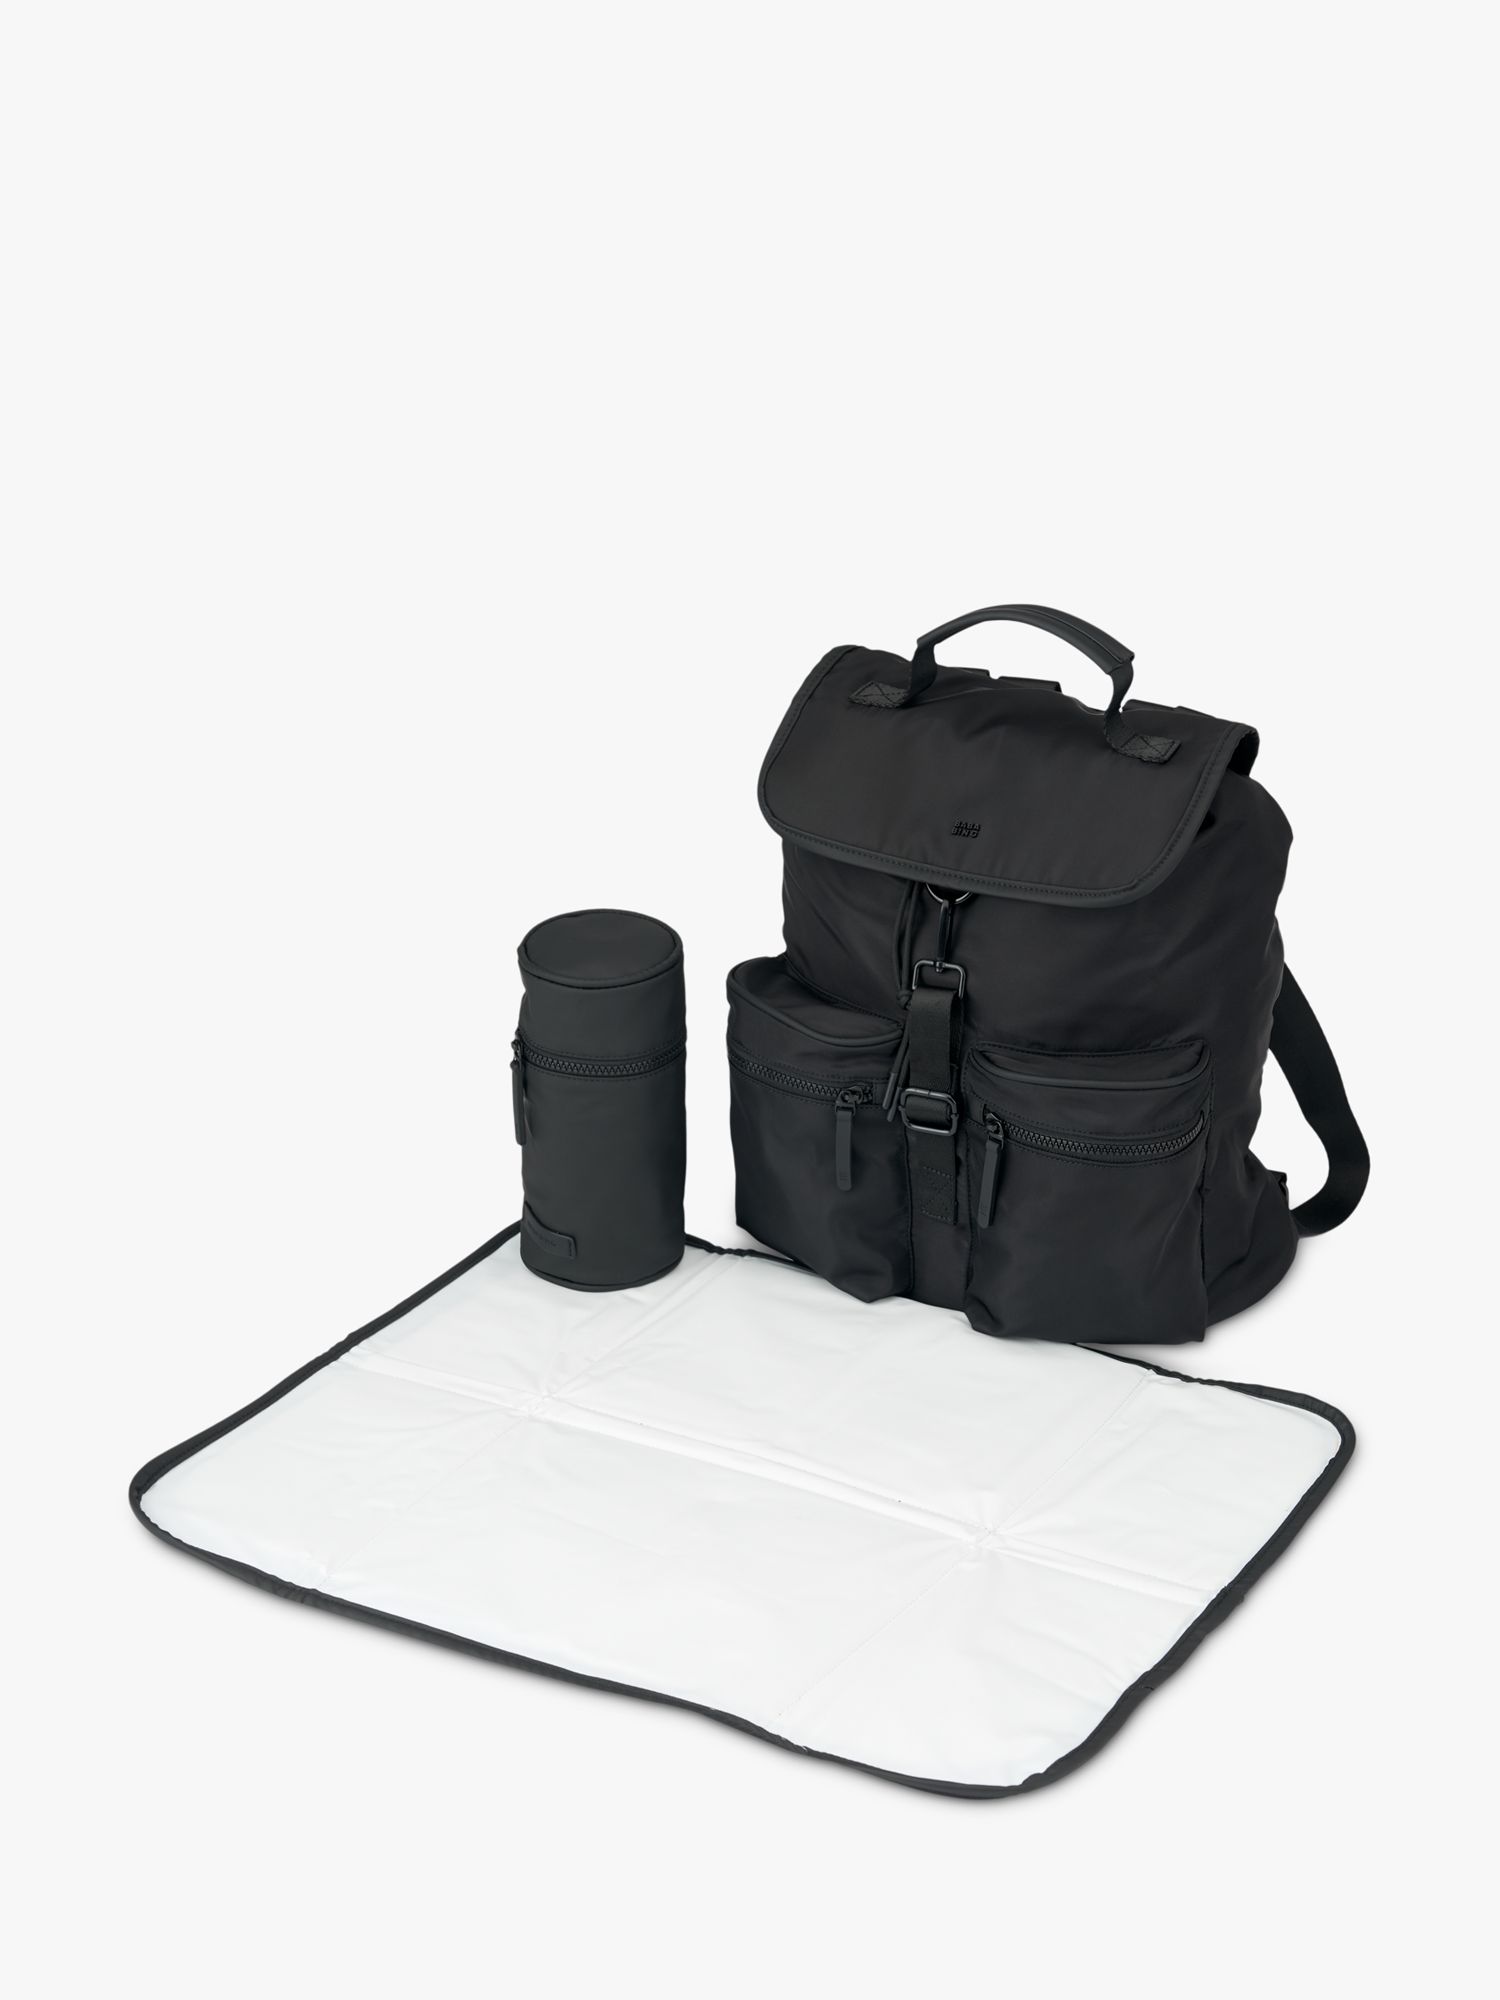 Nike Convertible Diaper Changing Bag in Black | DR6083-010